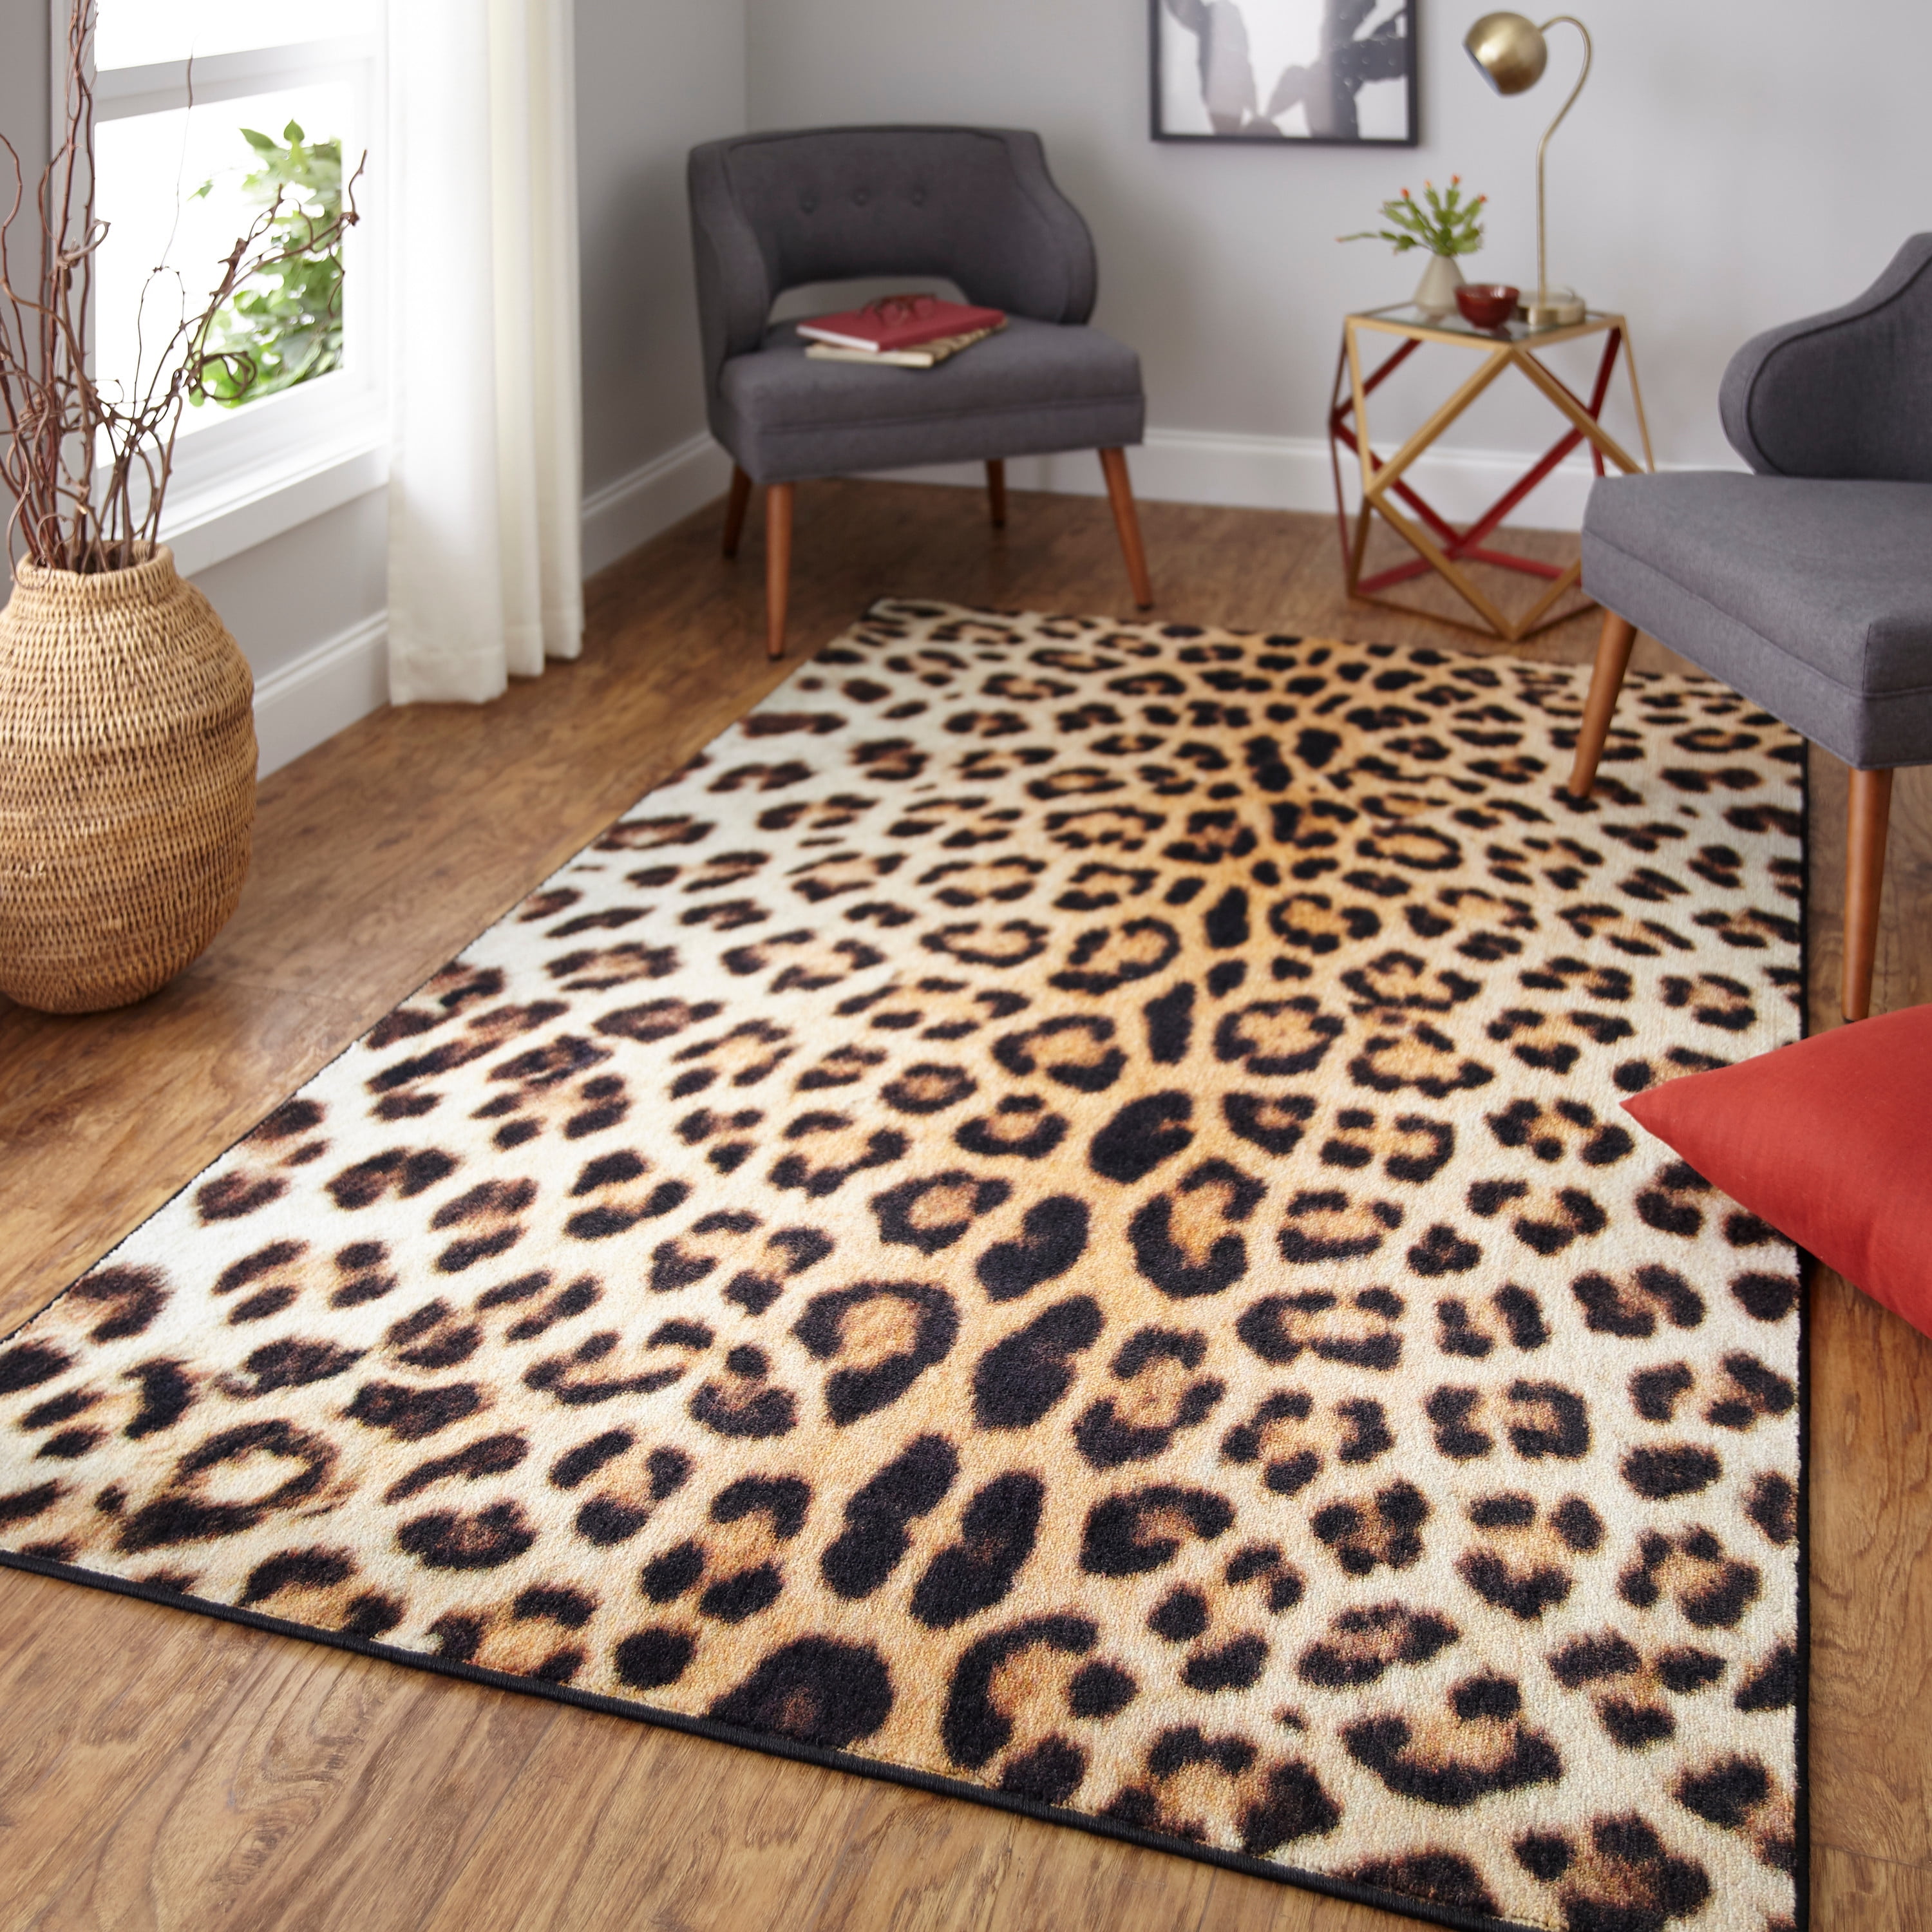 Leopard Print Rug Skin Hide Mat Faux Fur Animal Home Carpet Area Rug US Stock 